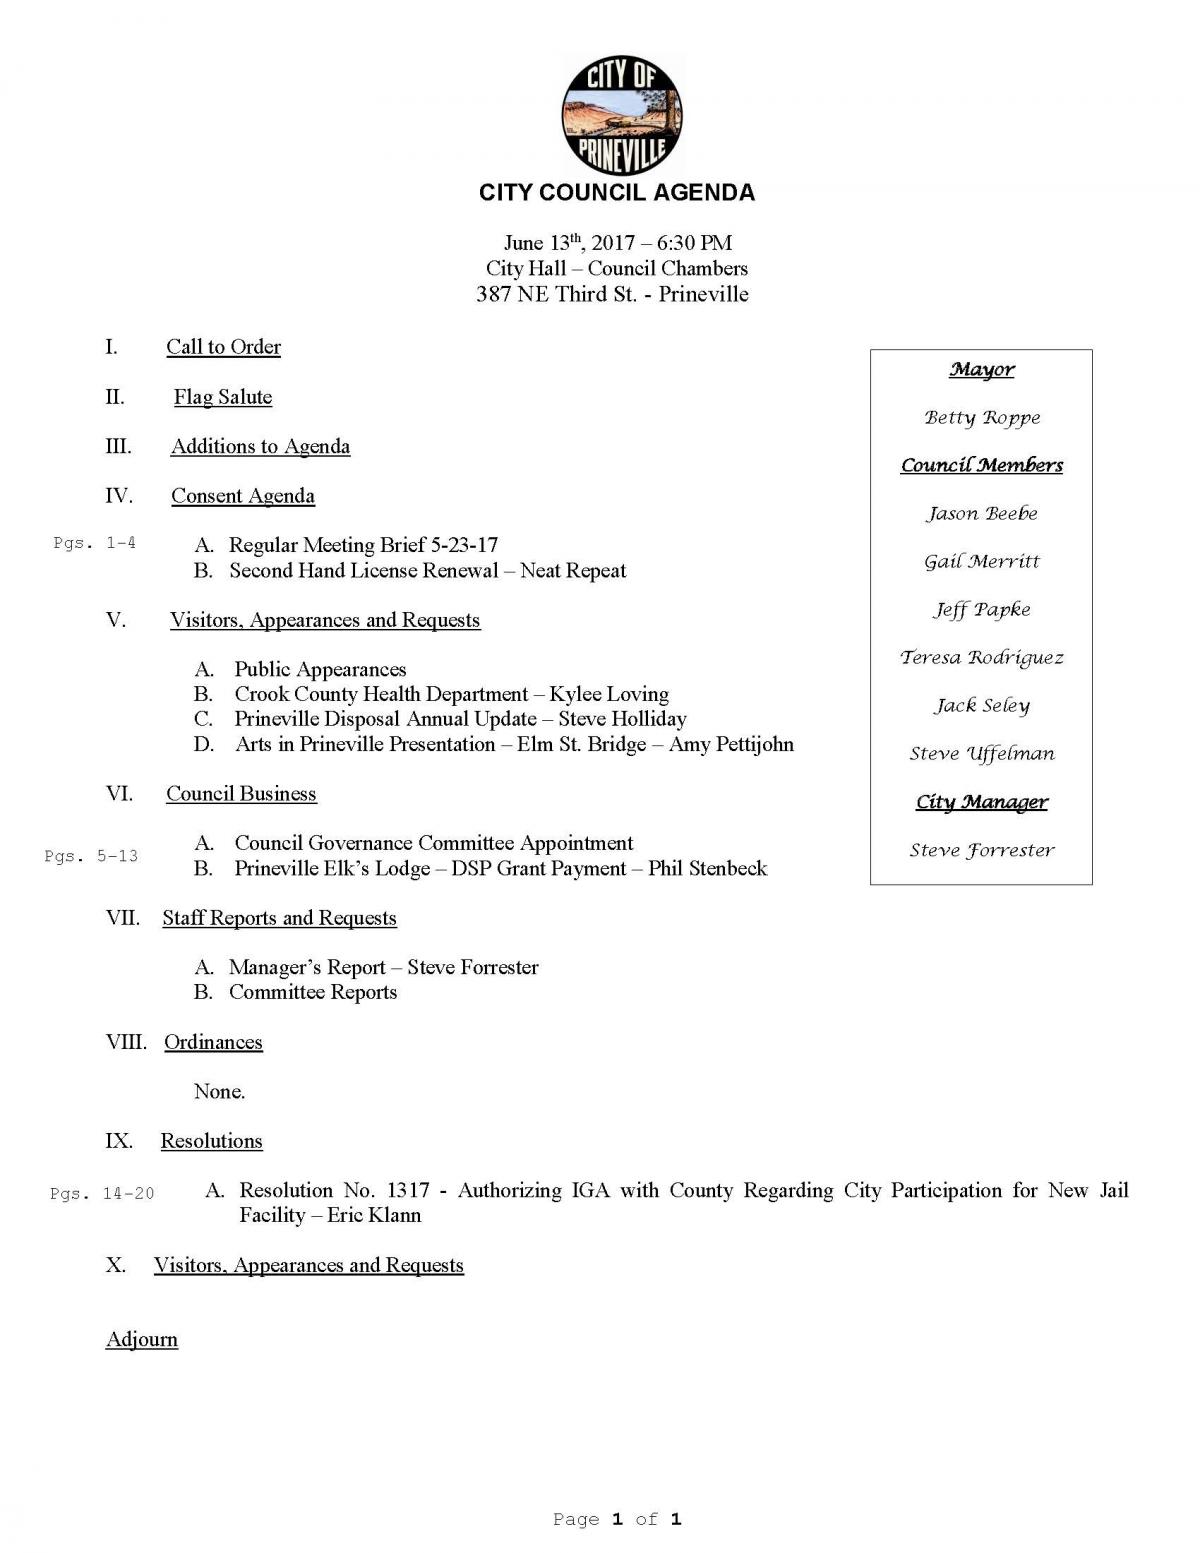 Council Agenda 6-13-17